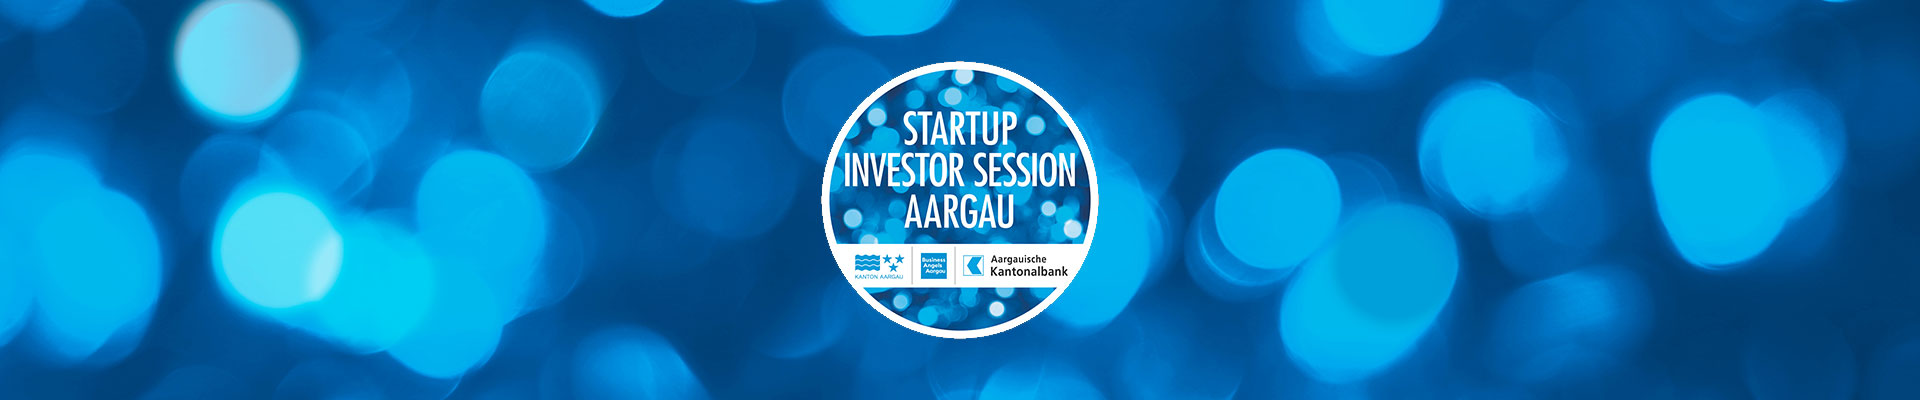 4. Startup Investor Session Aargau